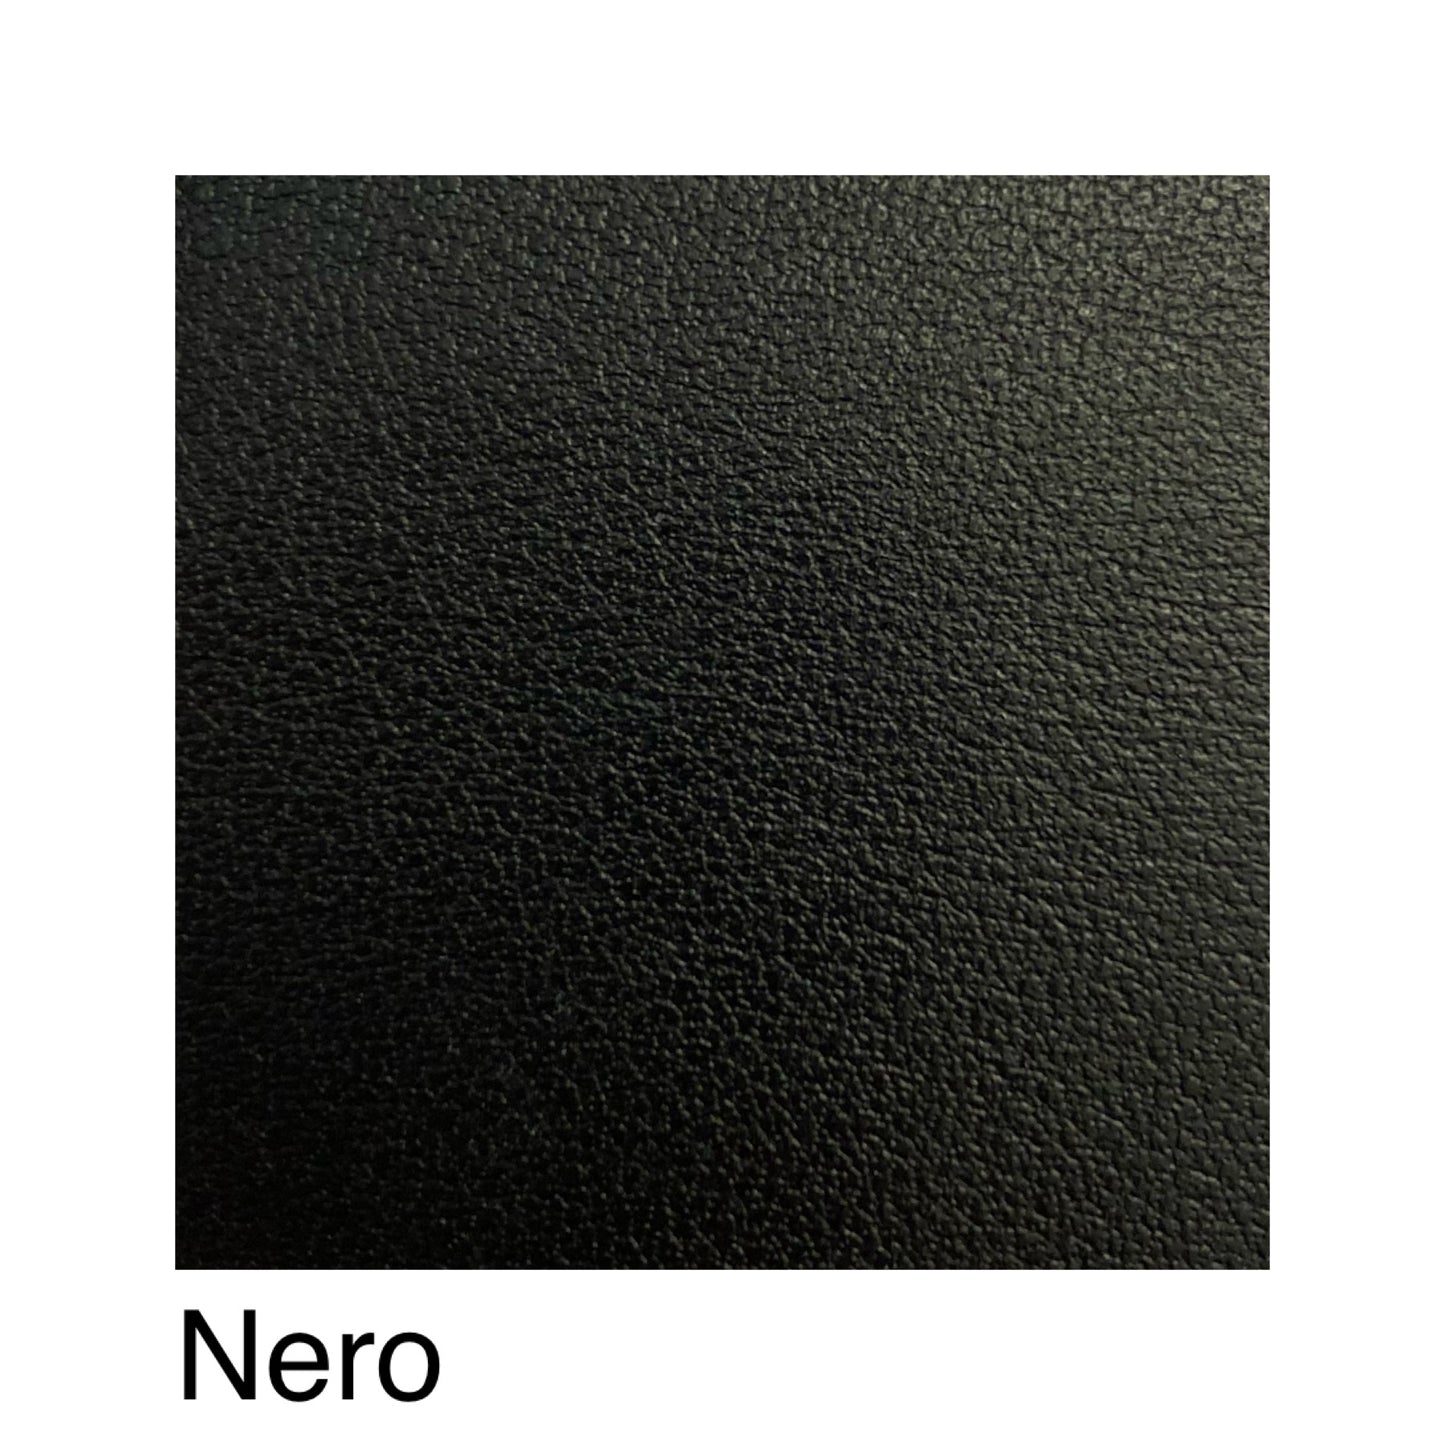 Leather - Italian - Smooth Calf